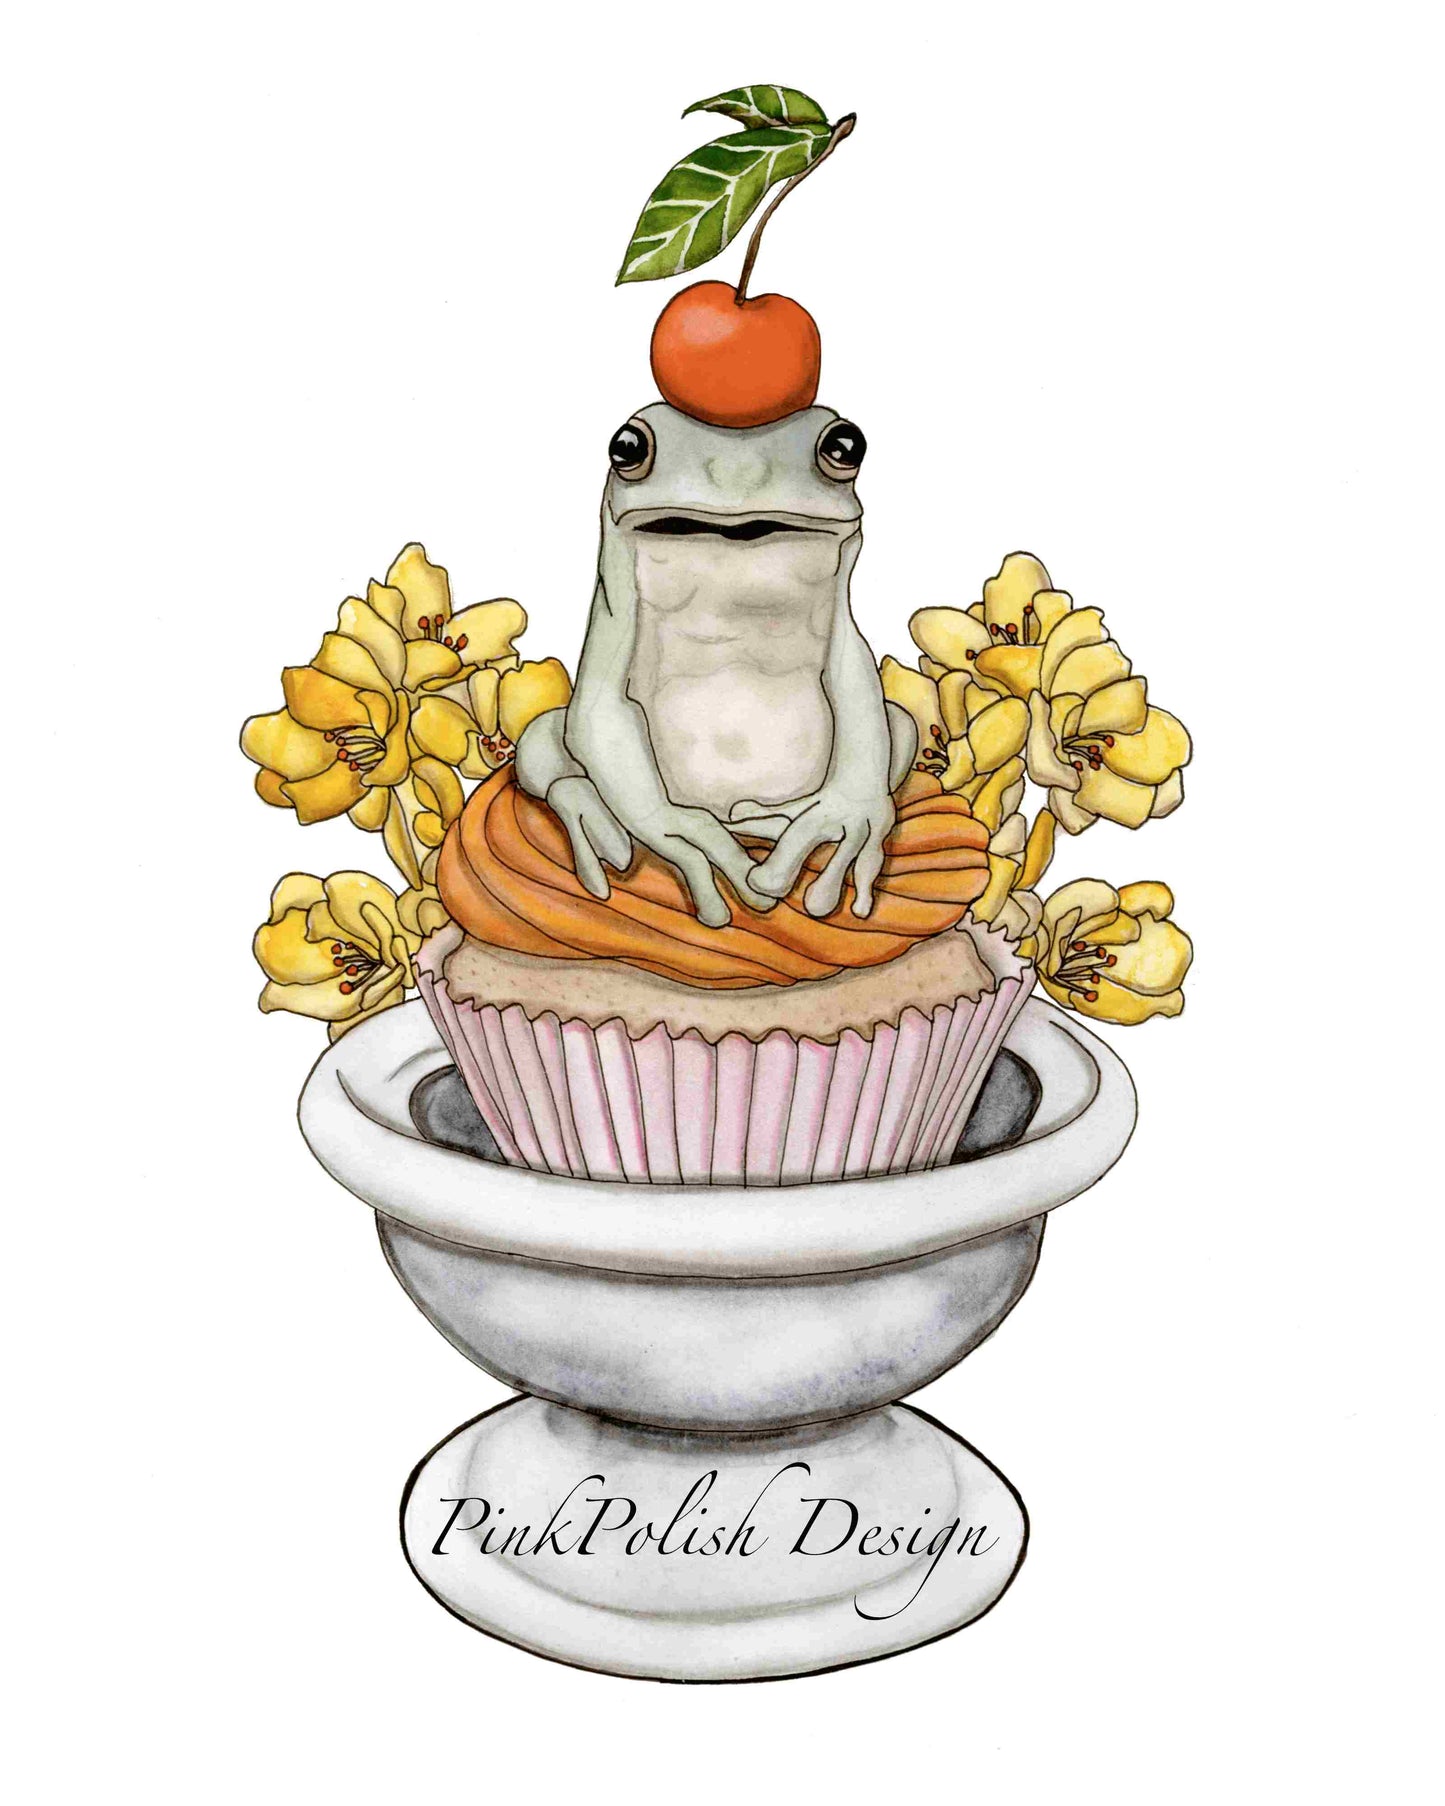 PinkPolish Design Art Prints "Frog Celebration" Watercolor Painting: Art Print